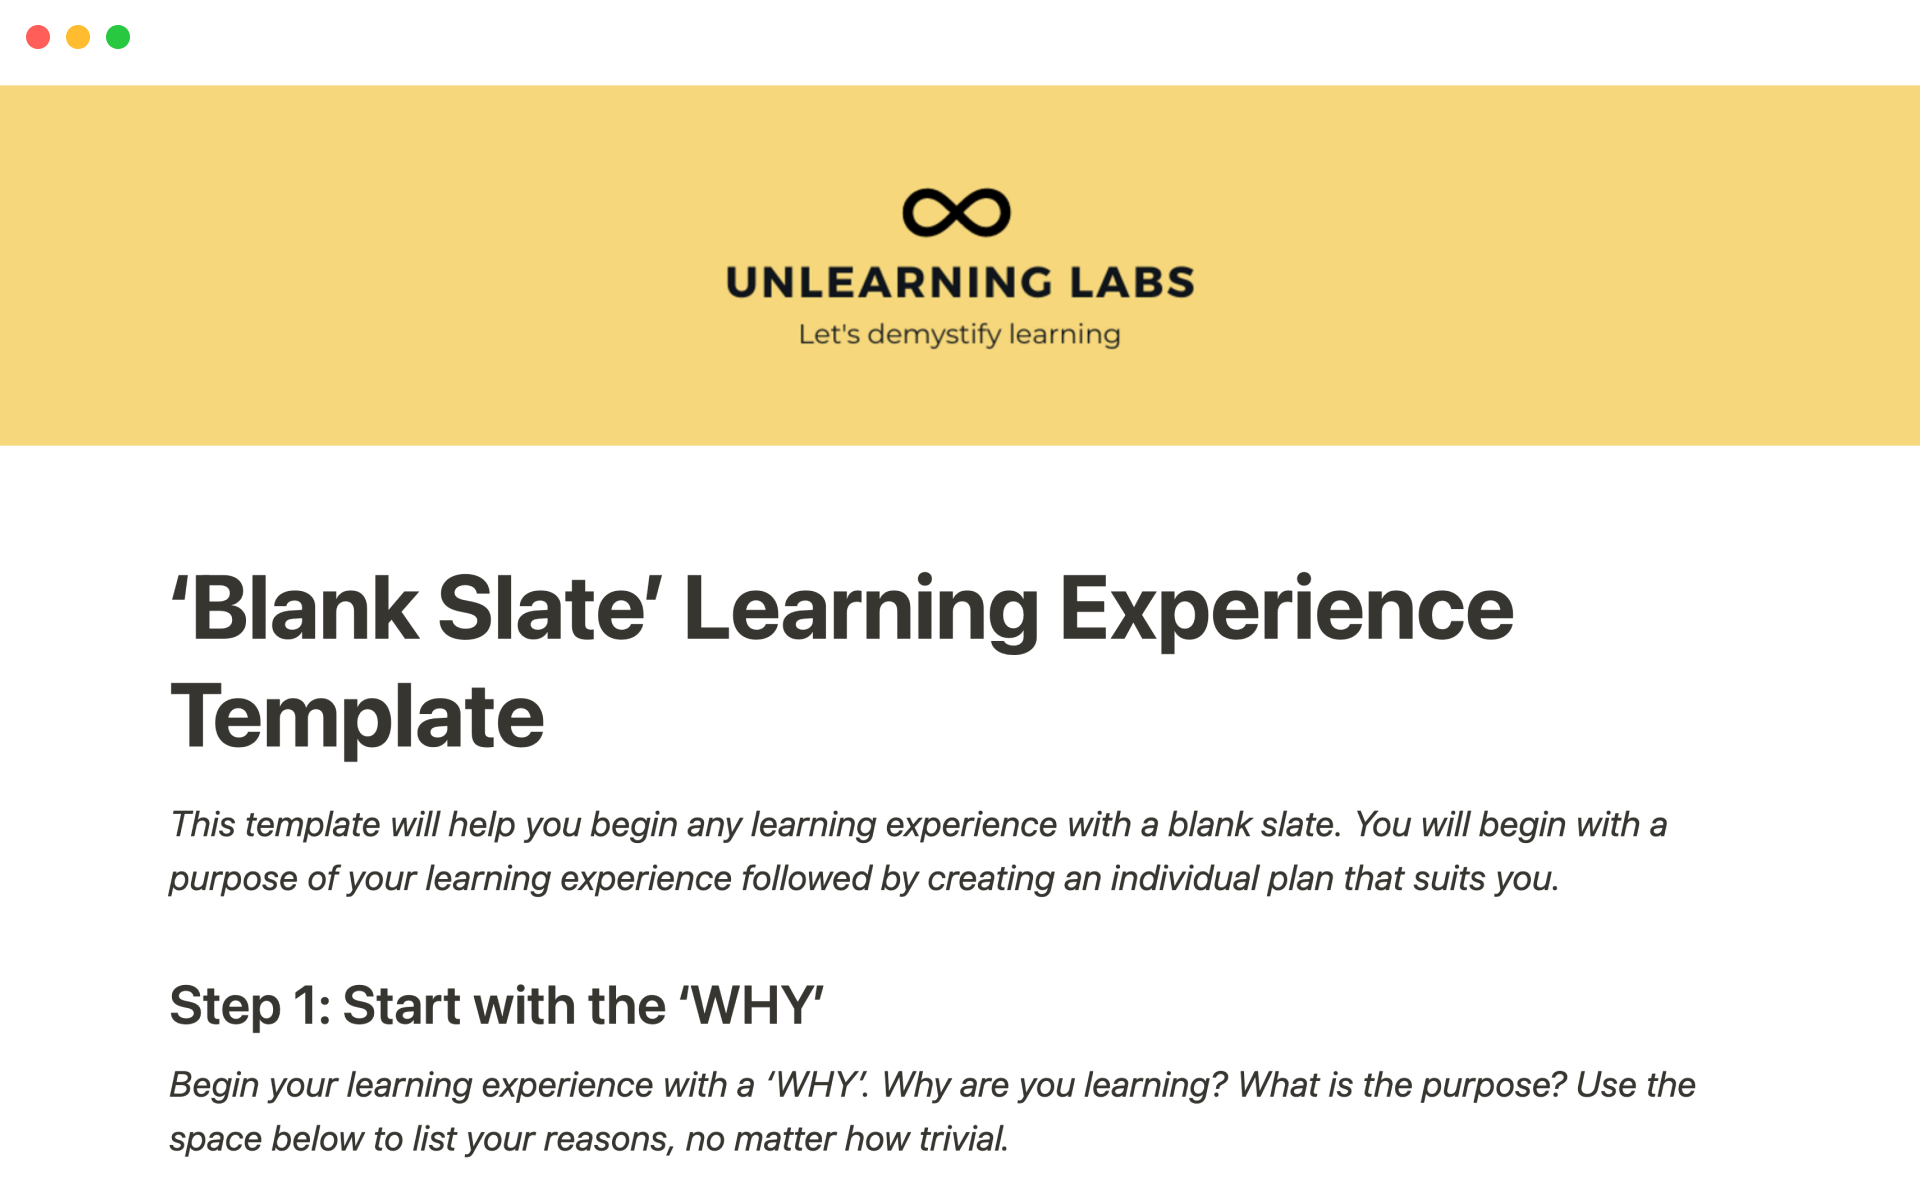 'Blank Slate' Learning Experience Template님의 템플릿 미리보기